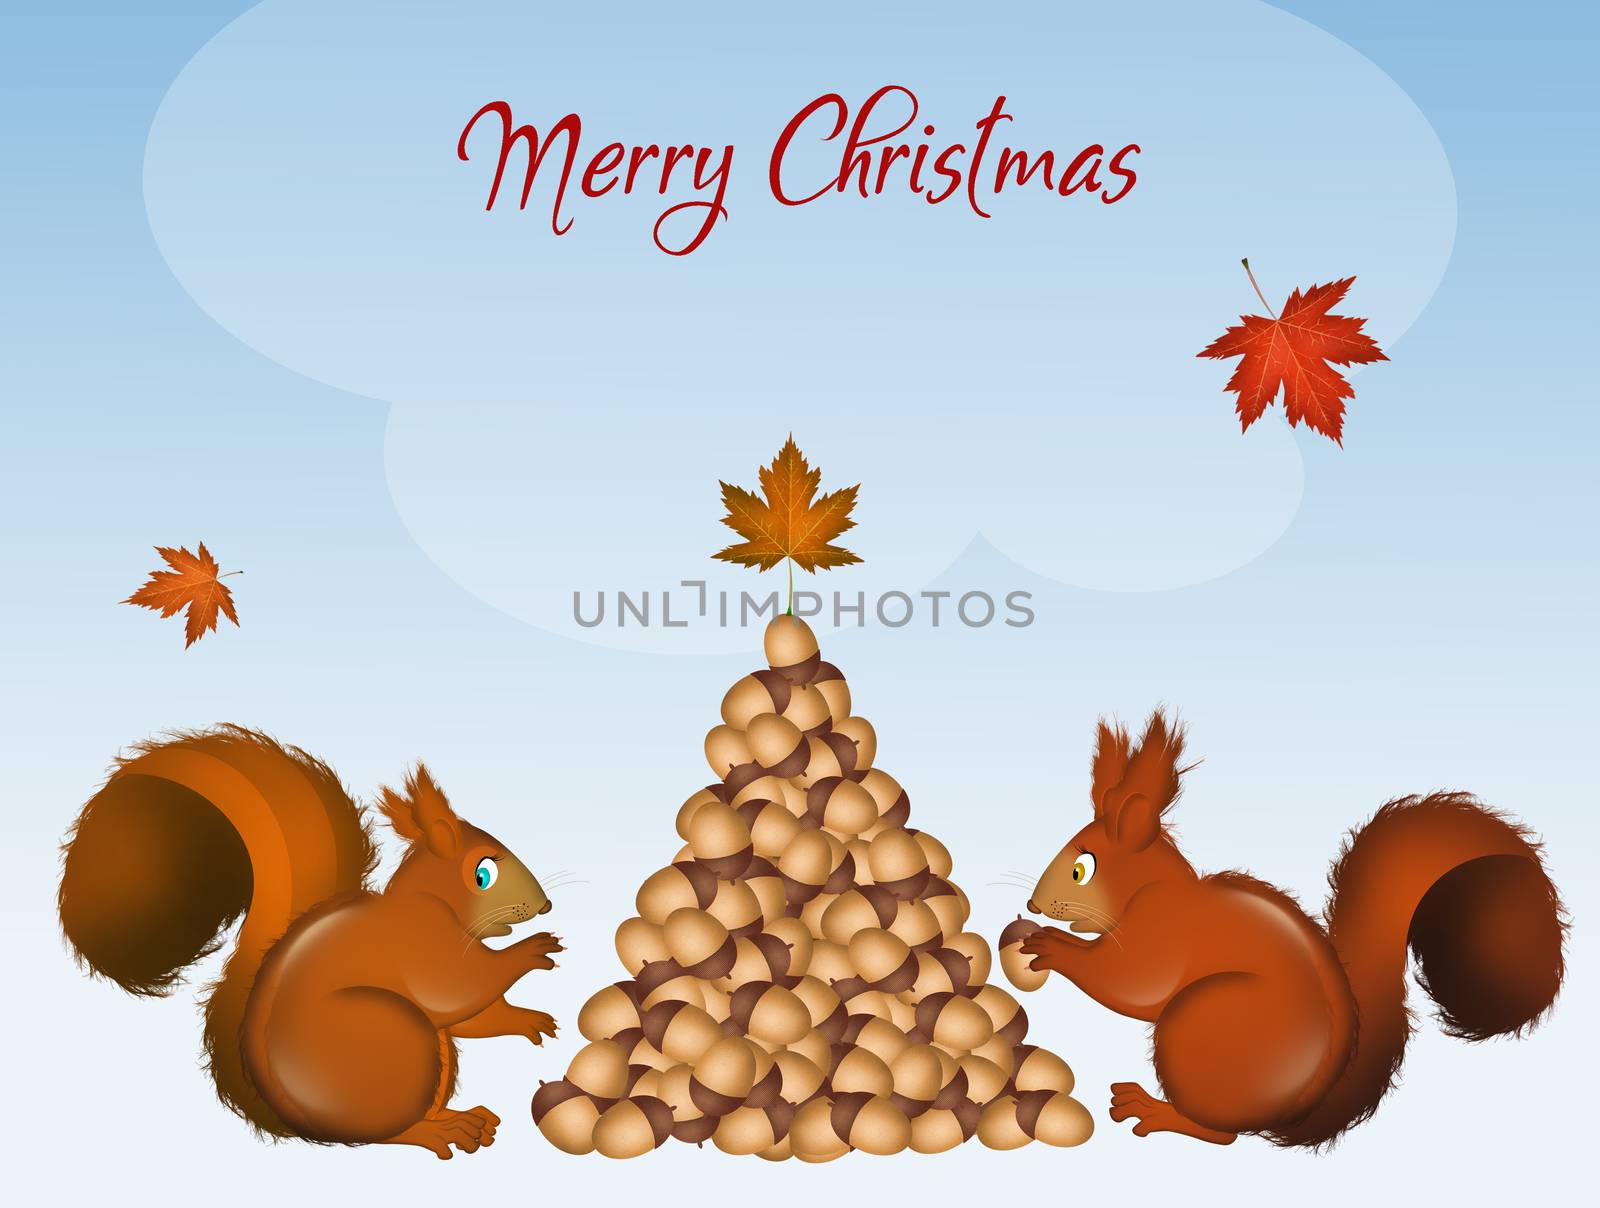 Christmas squirrels make tree with acorns by adrenalina